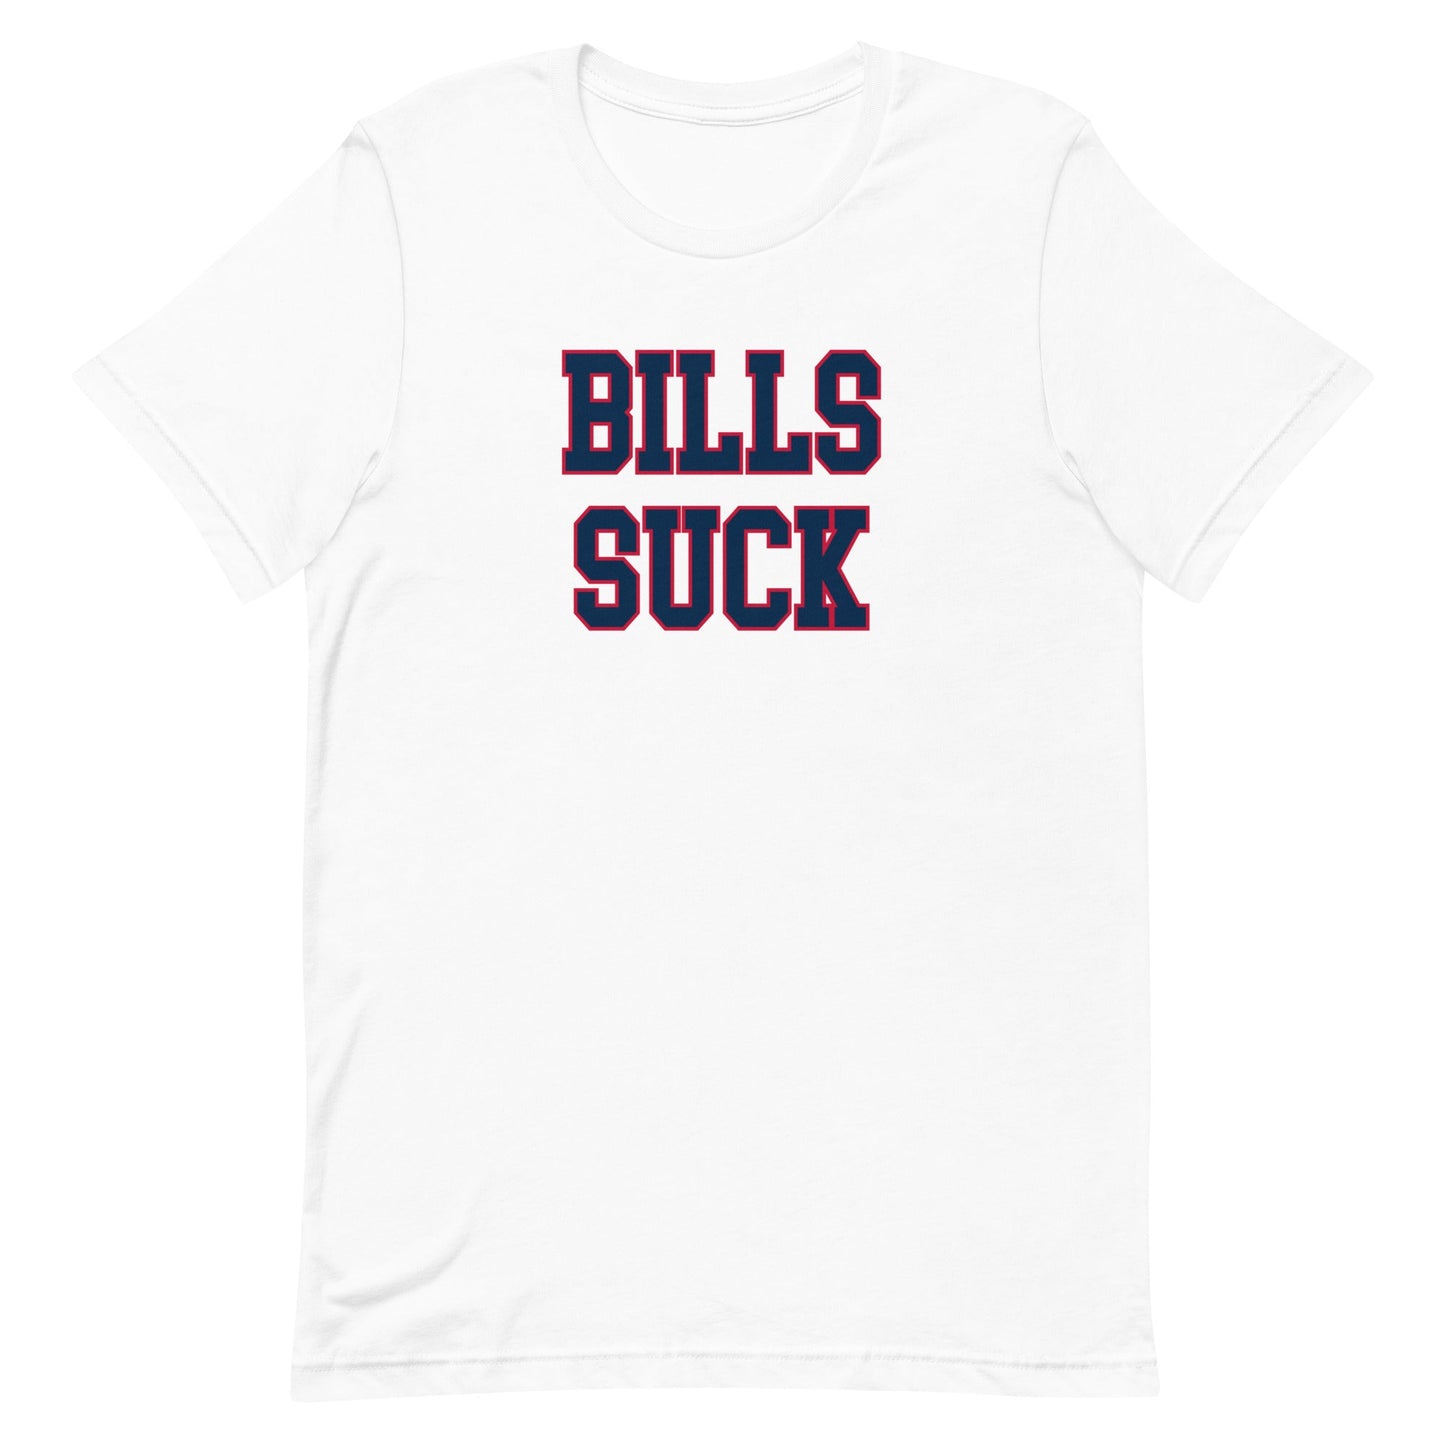 Rivalry Week Bills Suck Shirt - Patriots Rivalry Shirt White / XL